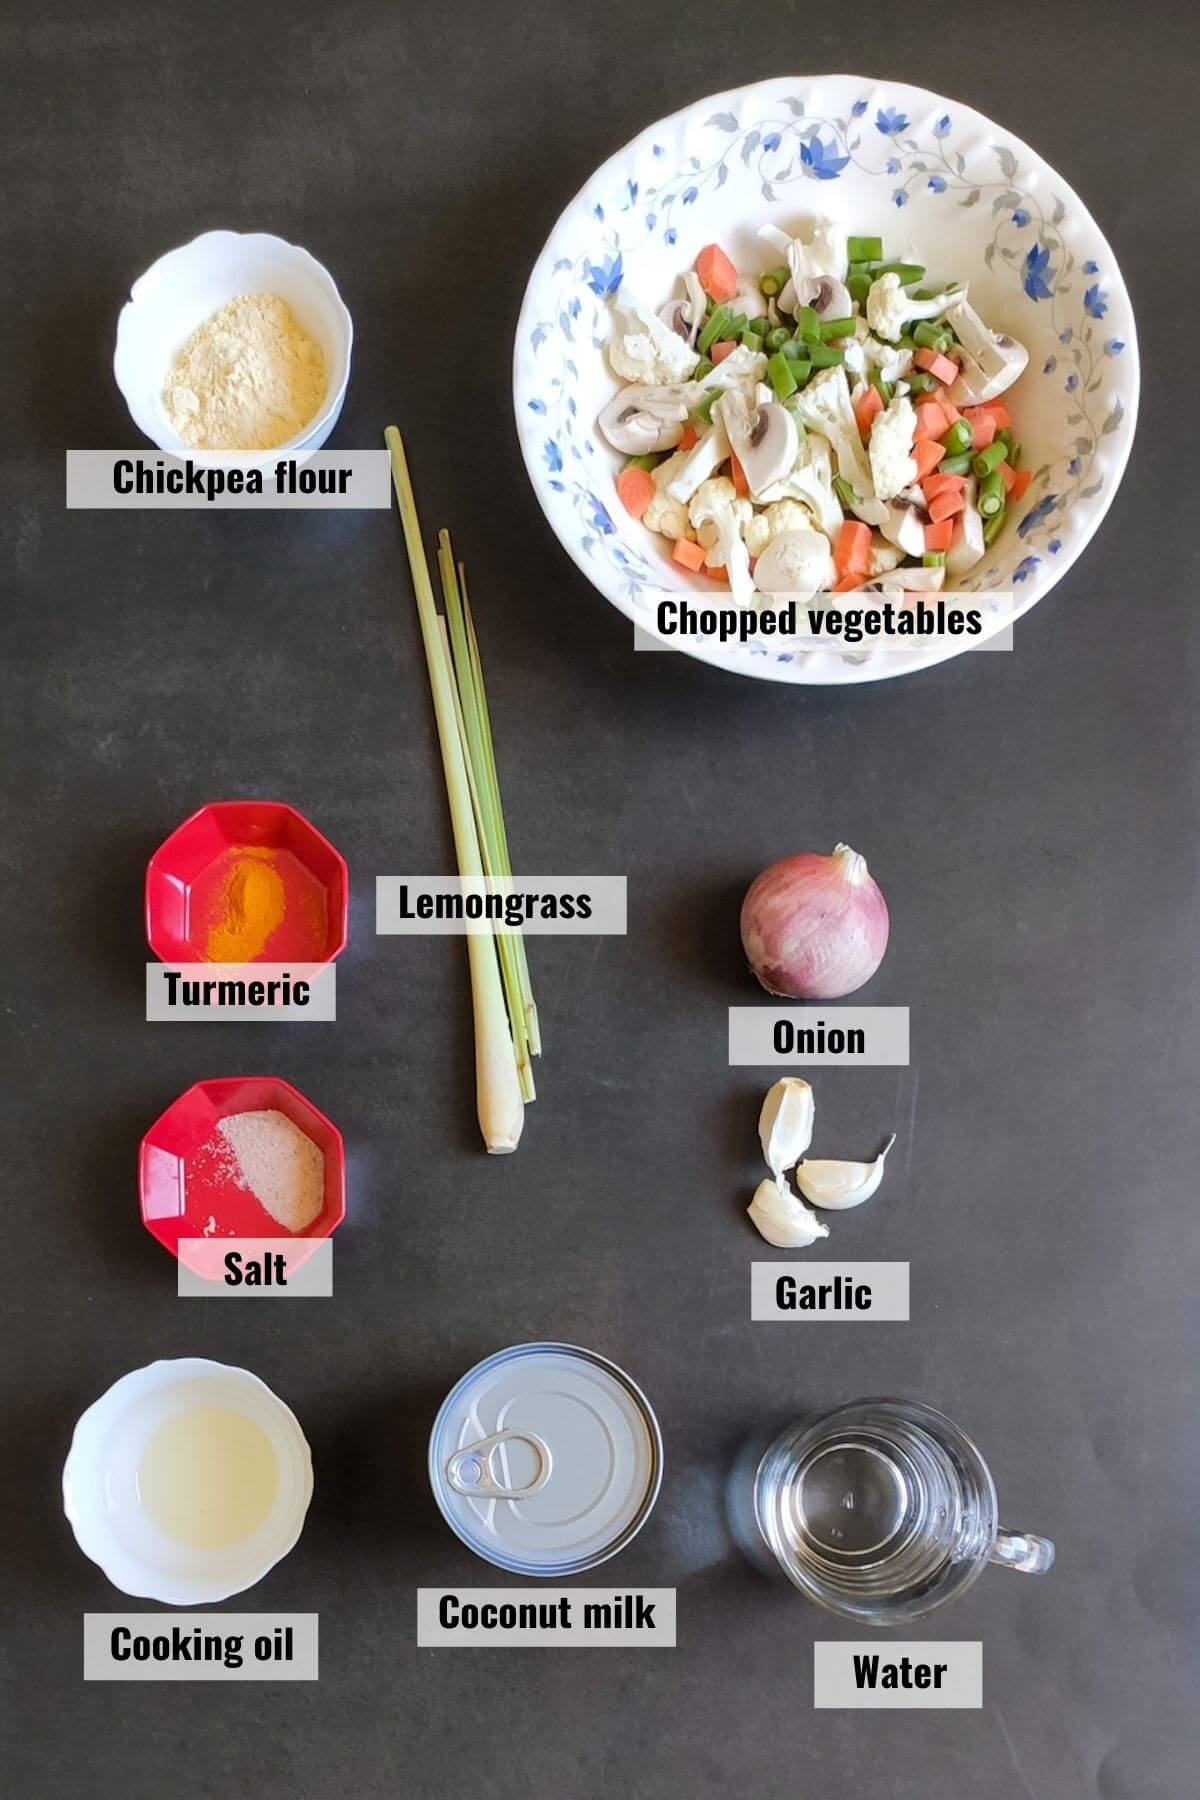 Ingredients for vegan khow suey, labelled.